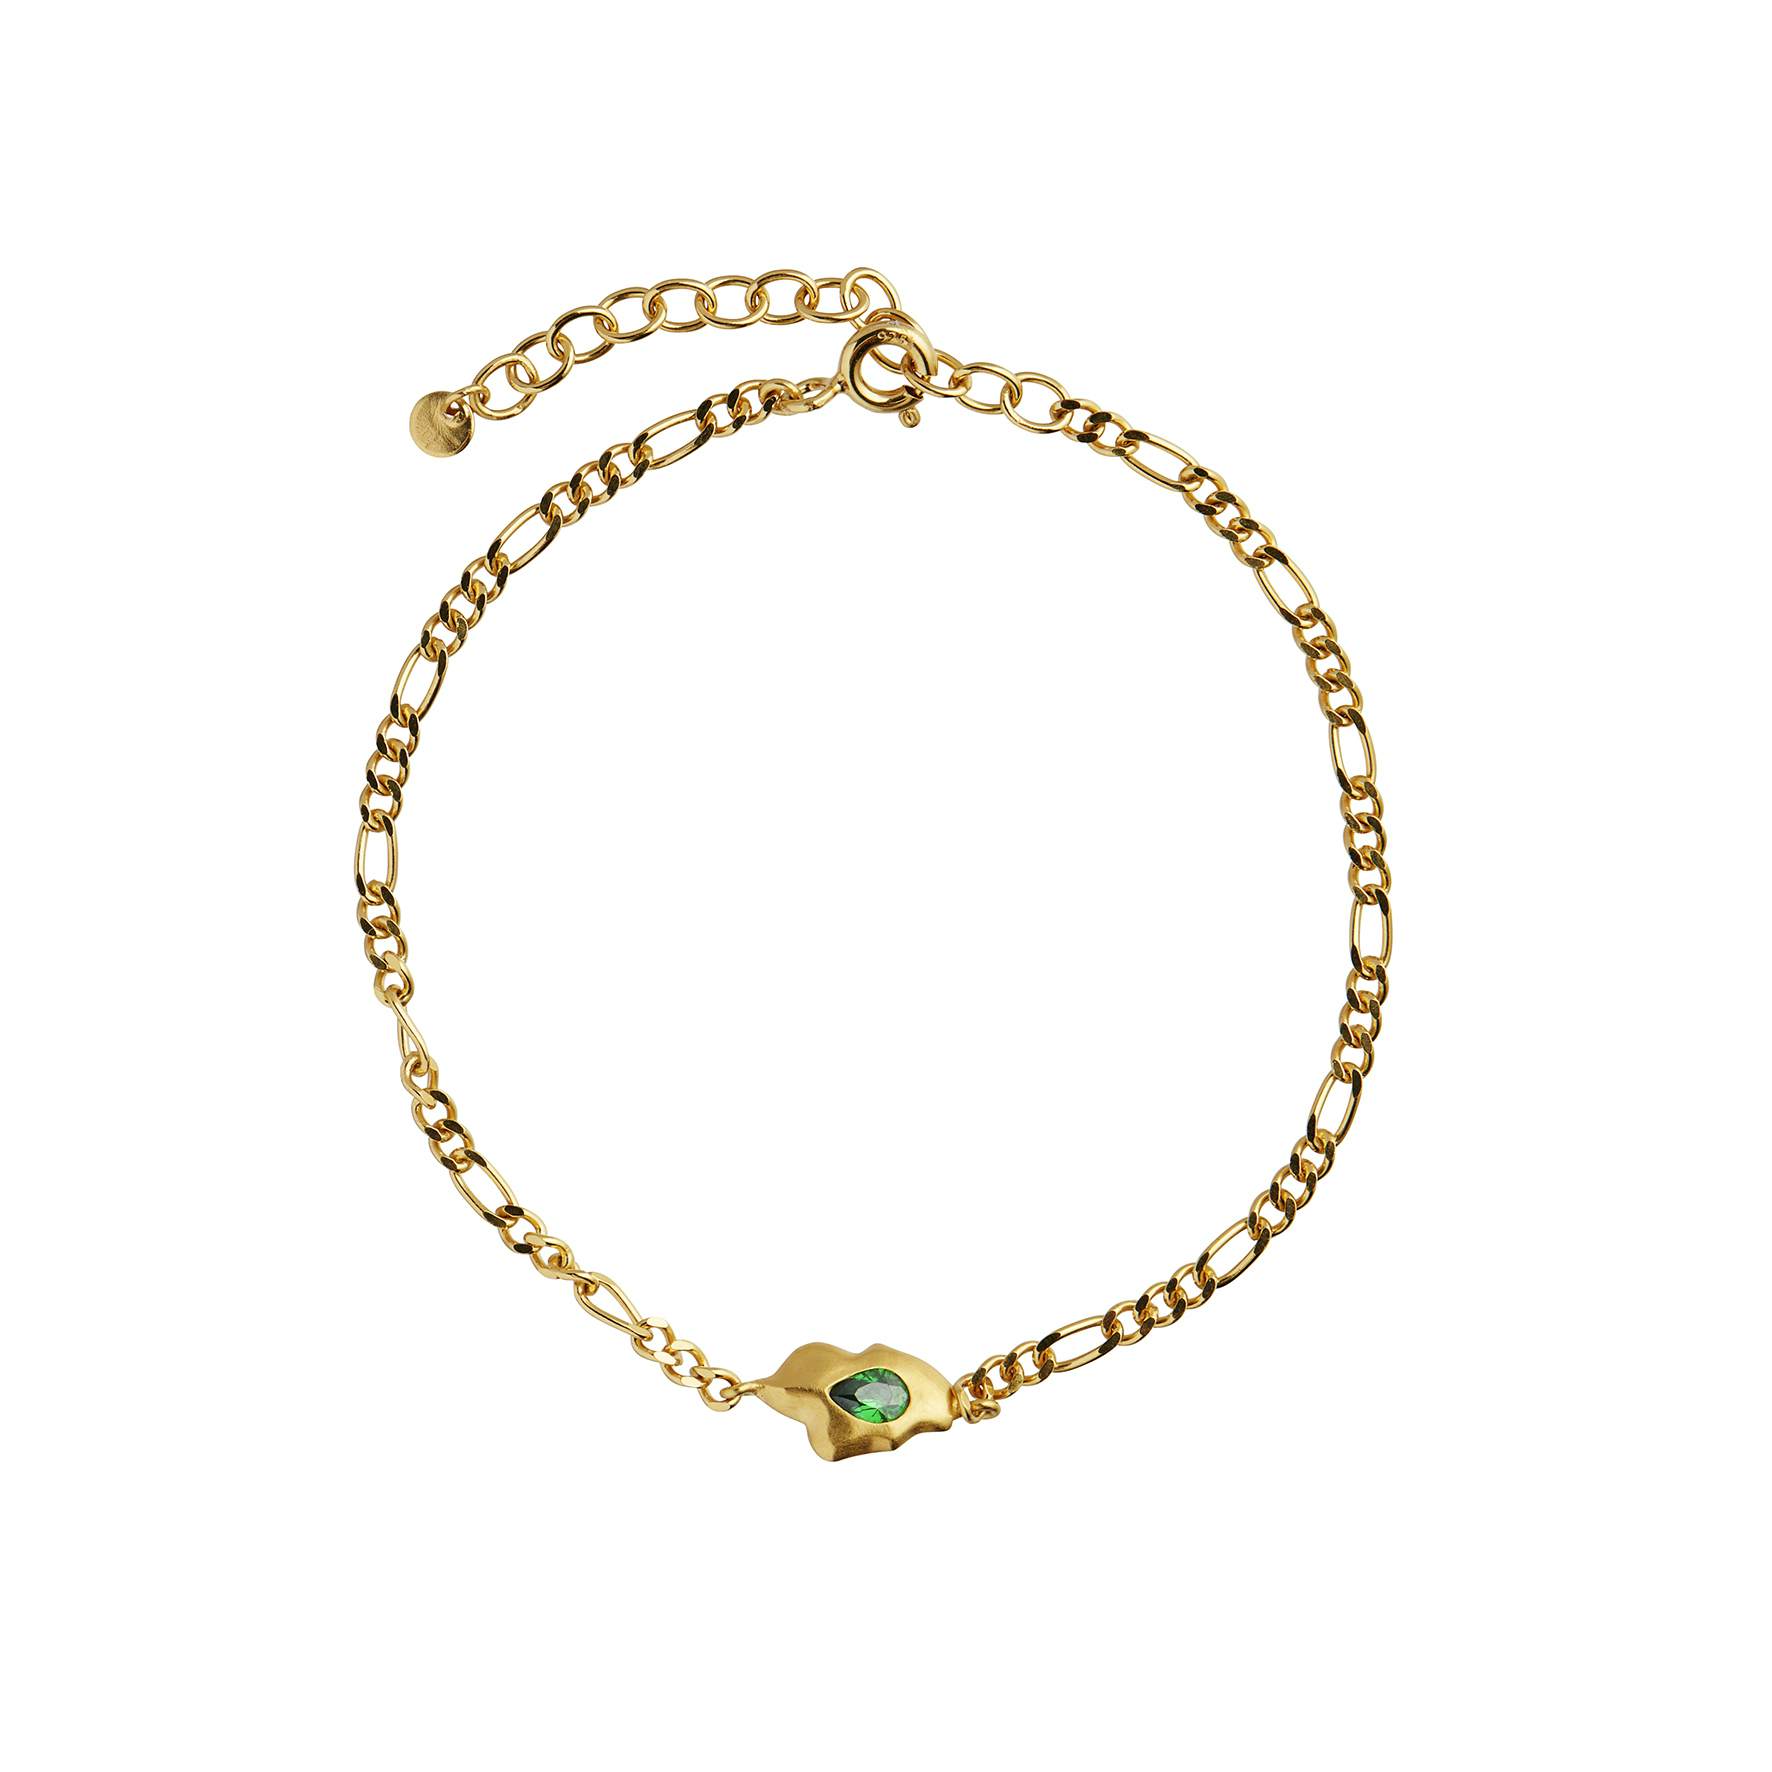 Glimpse Figaro Bracelet With Green Stone von STINE A Jewelry in Vergoldet-Silber Sterling 925